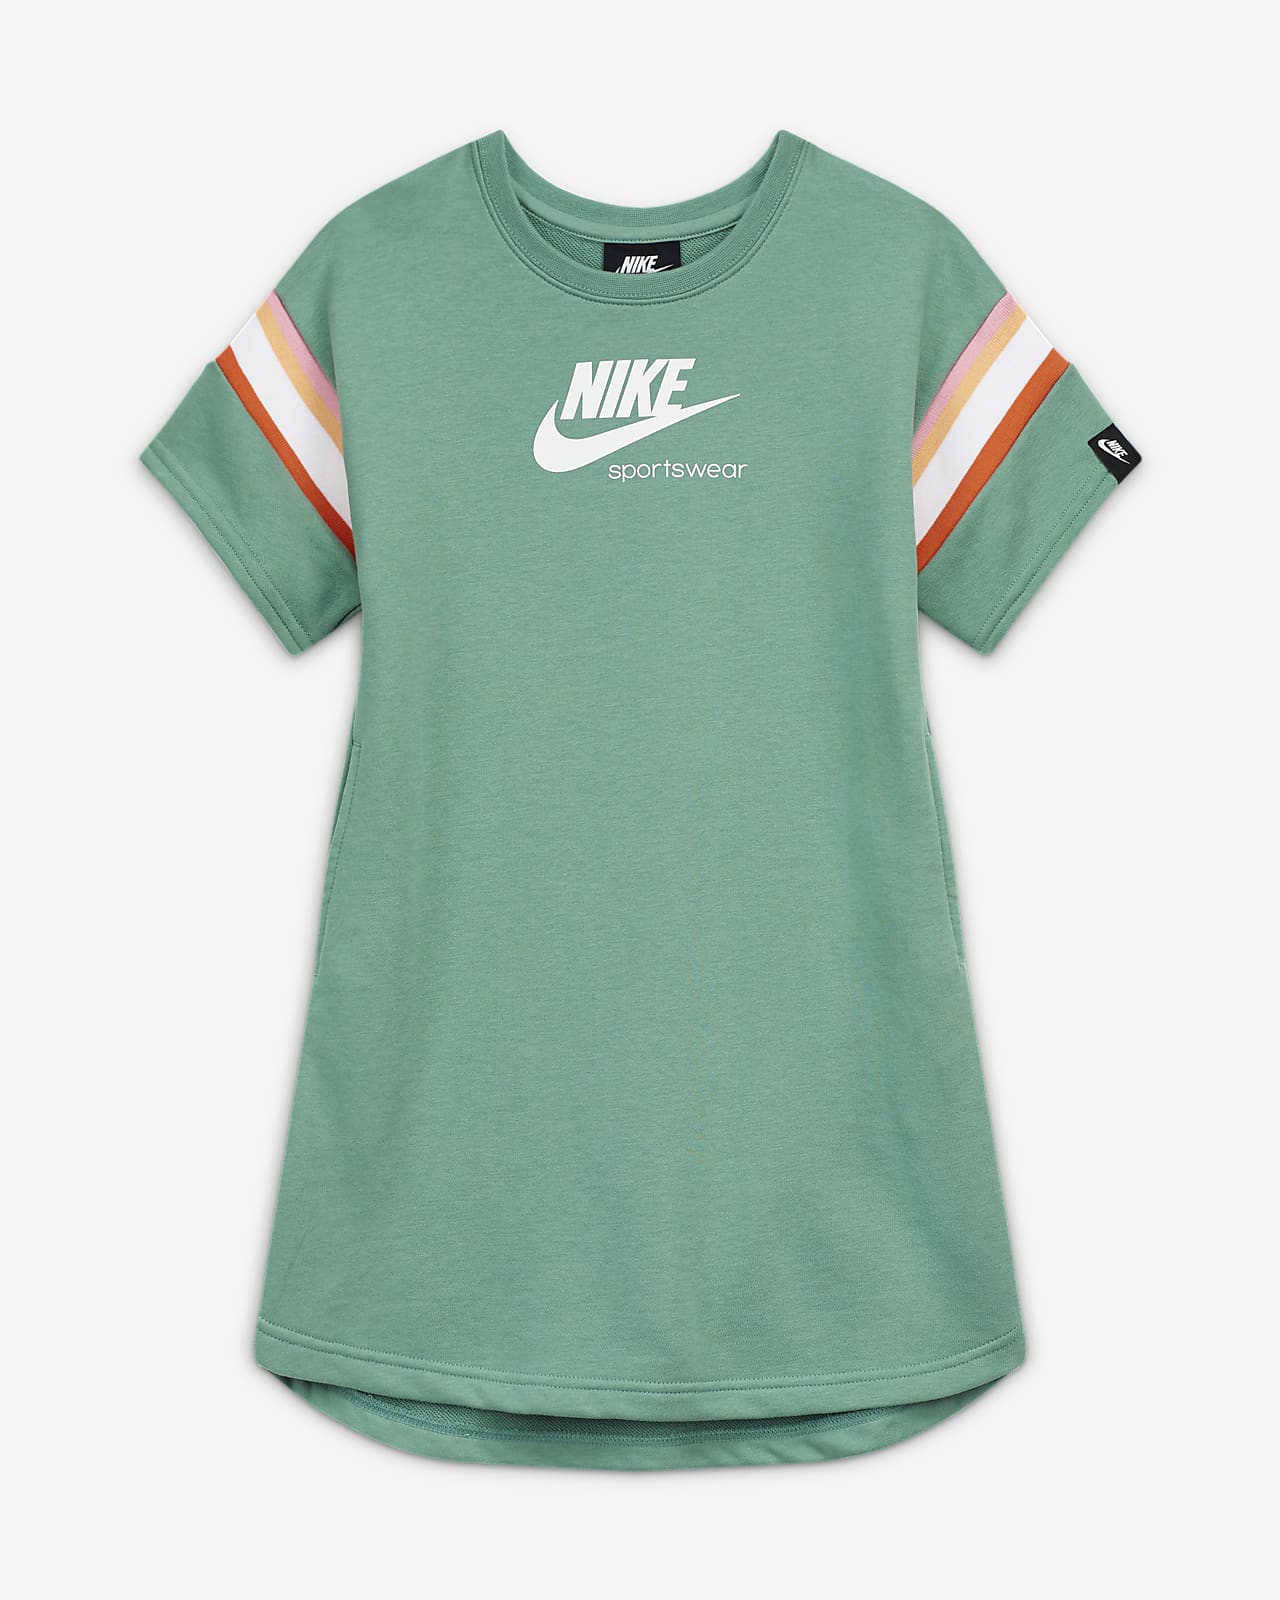 Nike Sportswear Big Kids' (Girls') Jersey Dress.